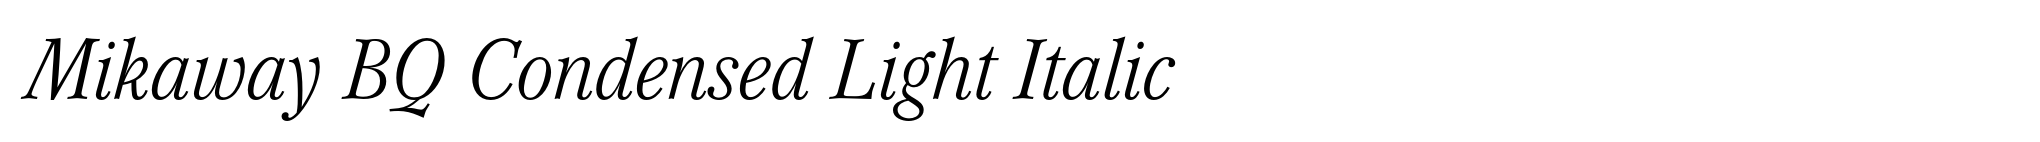 Mikaway BQ Condensed Light Italic image